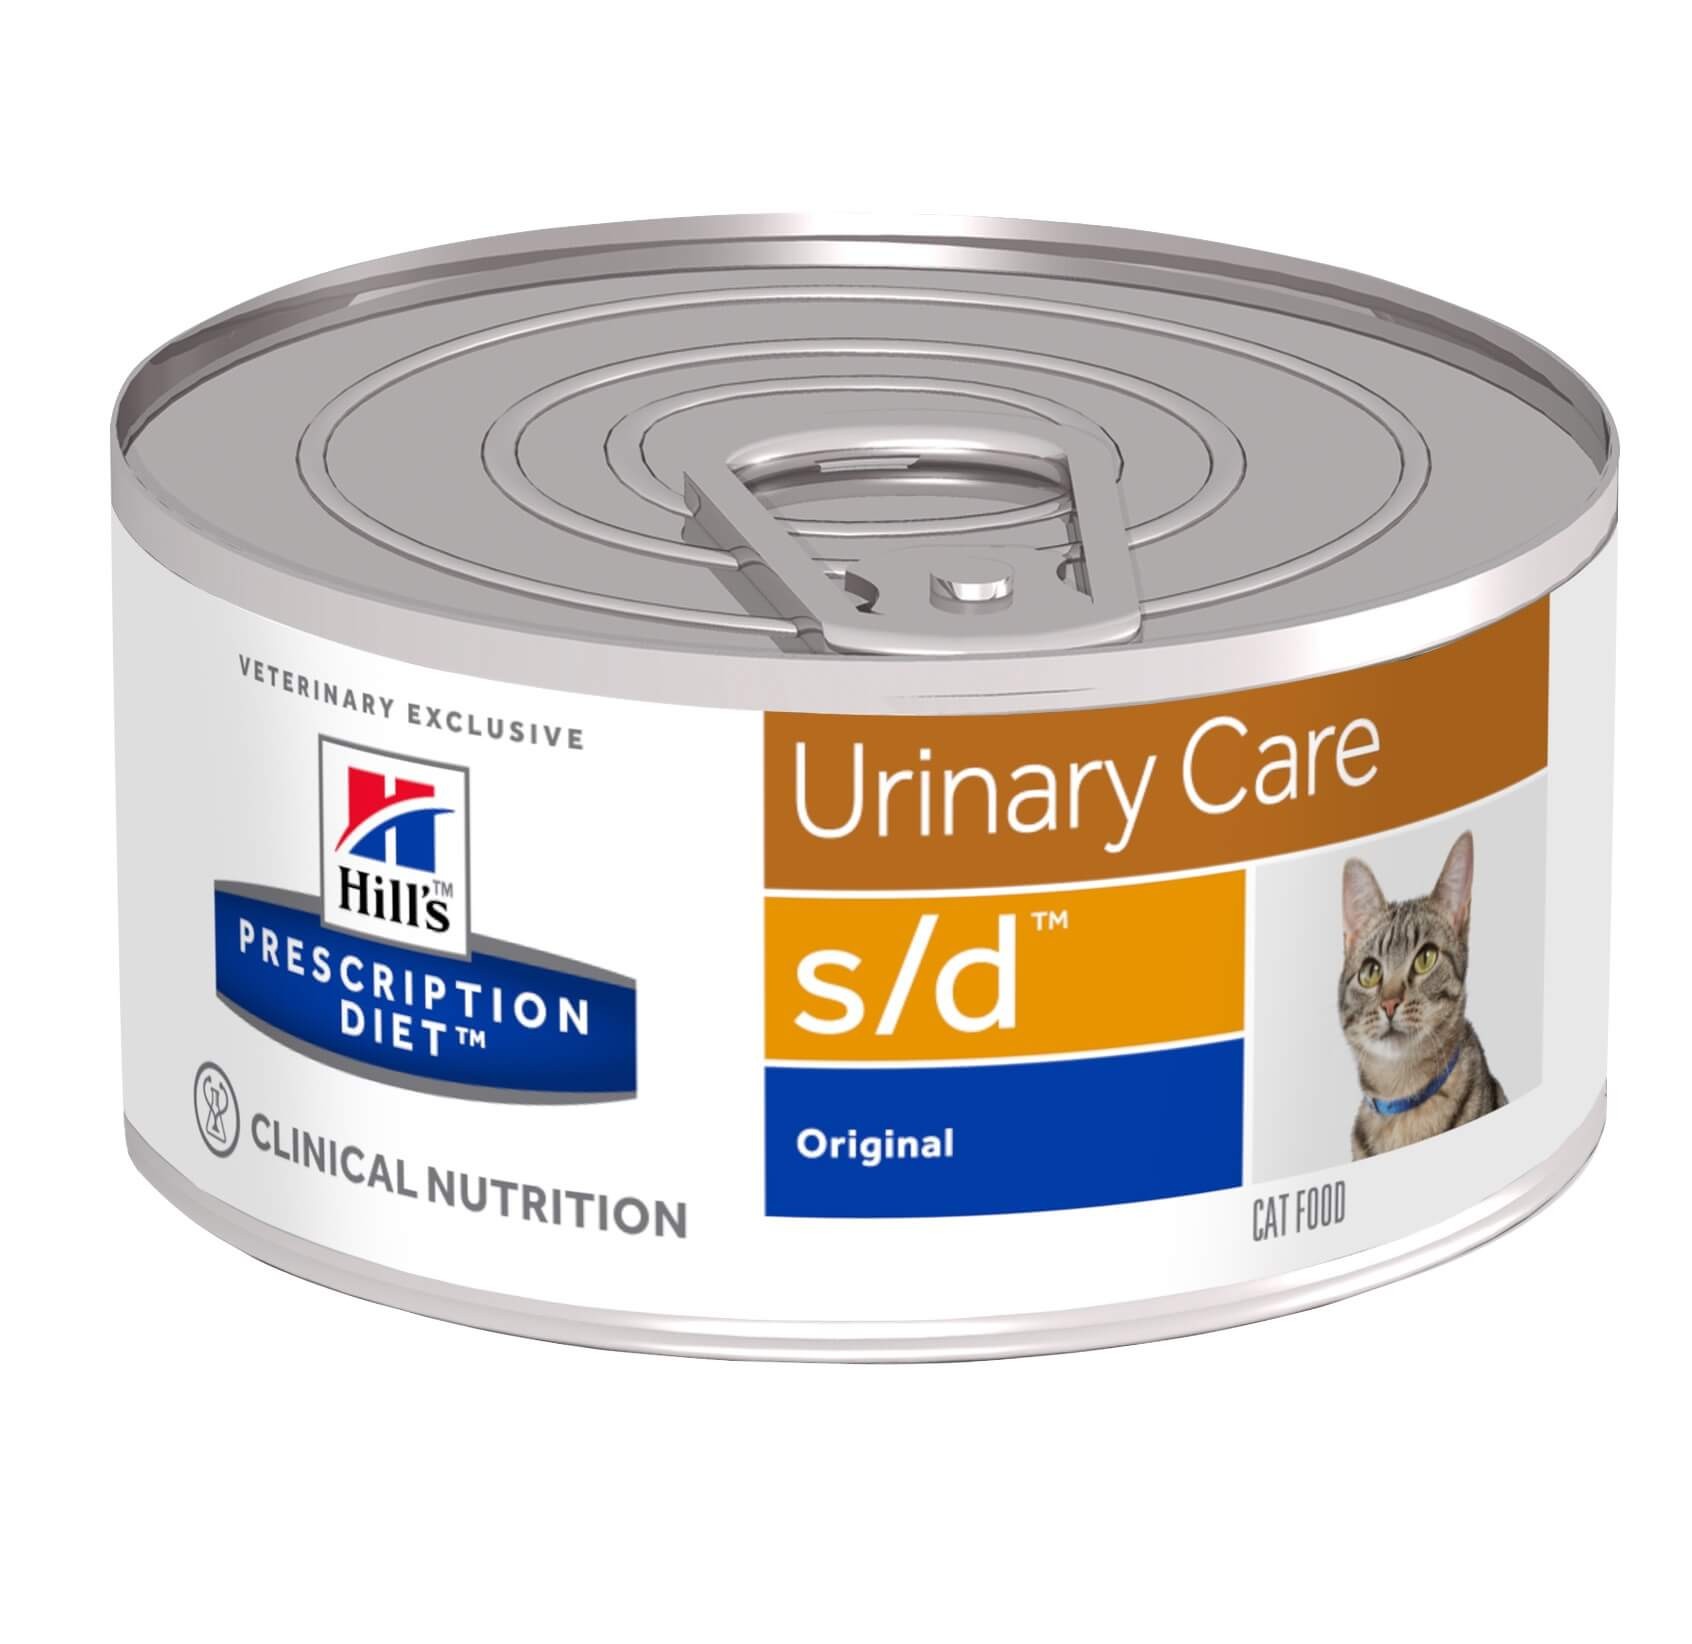 Hill's Prescription S/D Urinary Care kattenvoer 156 g blik